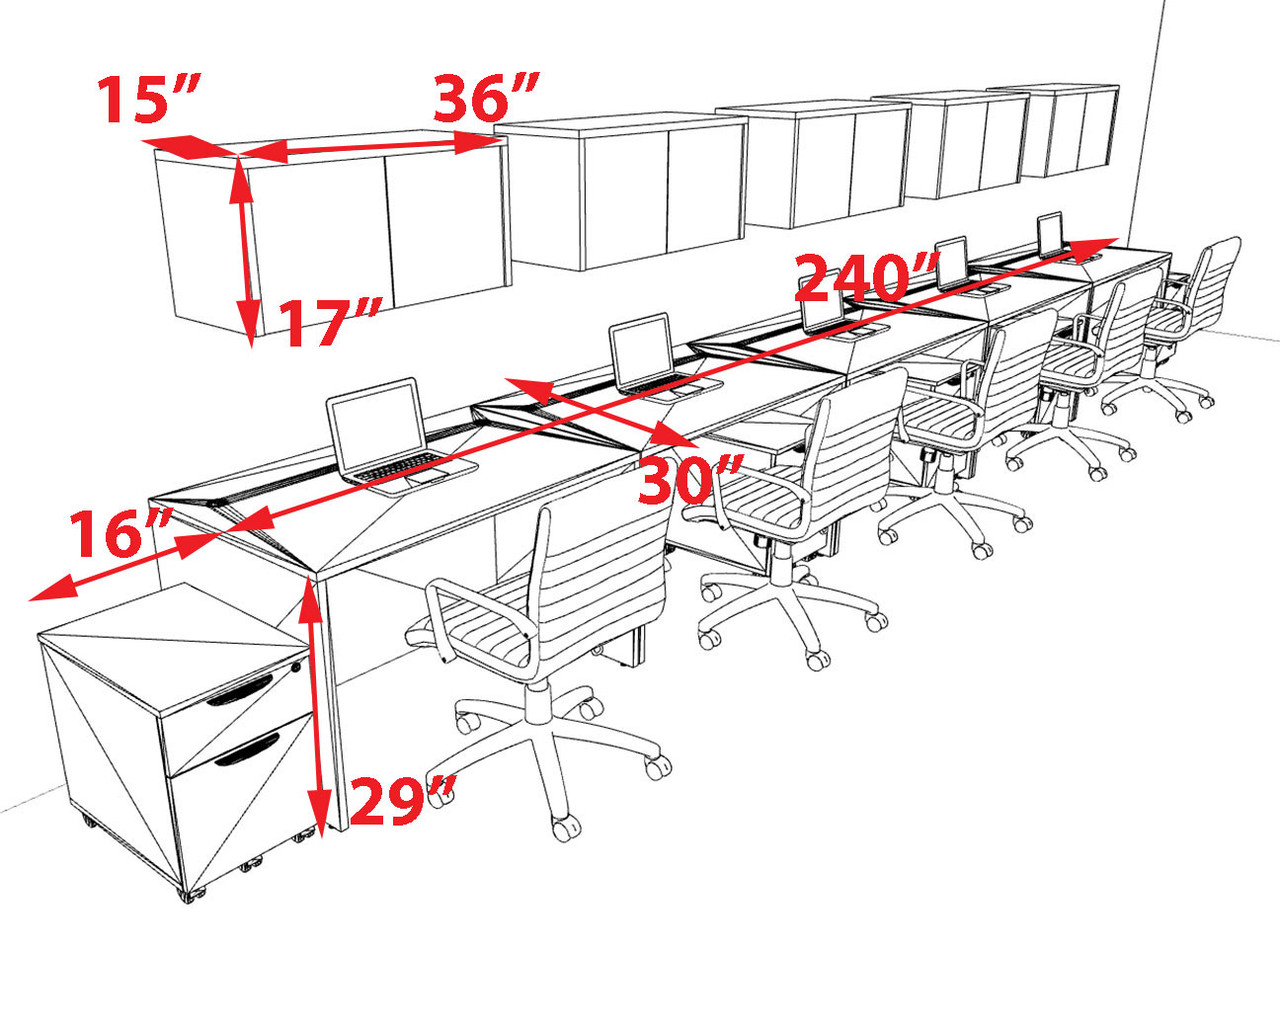 Five Person Modern No Panel Office Workstation Desk Set, #OT-SUS-SPN65